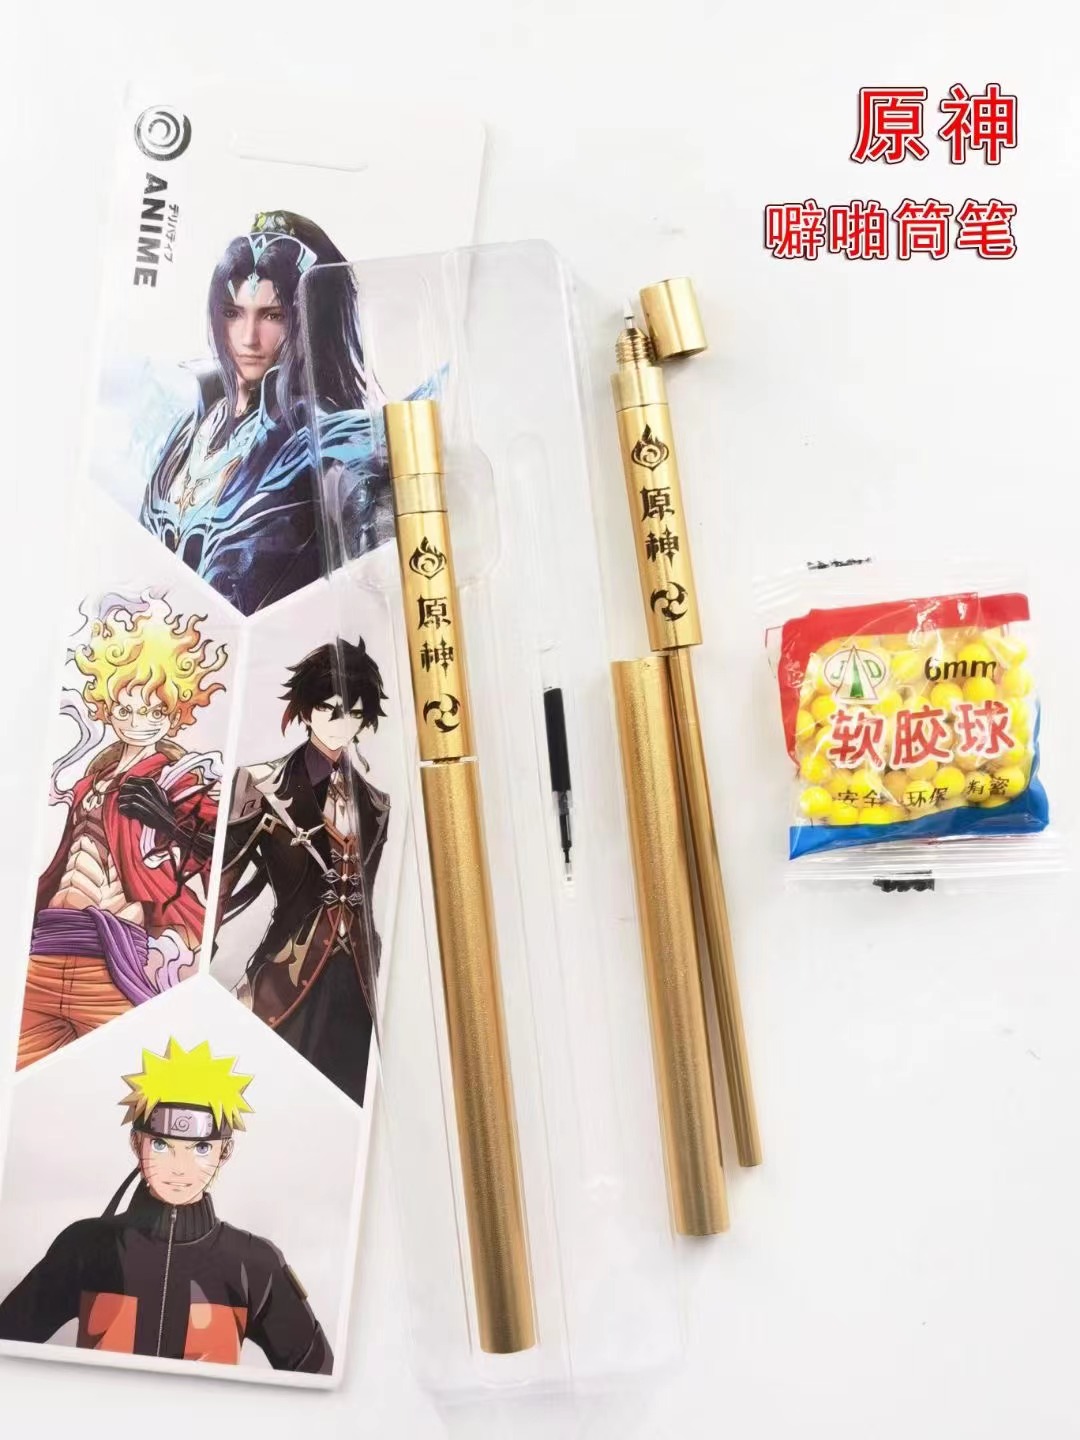 Genshin Impact anime pipa tube pen